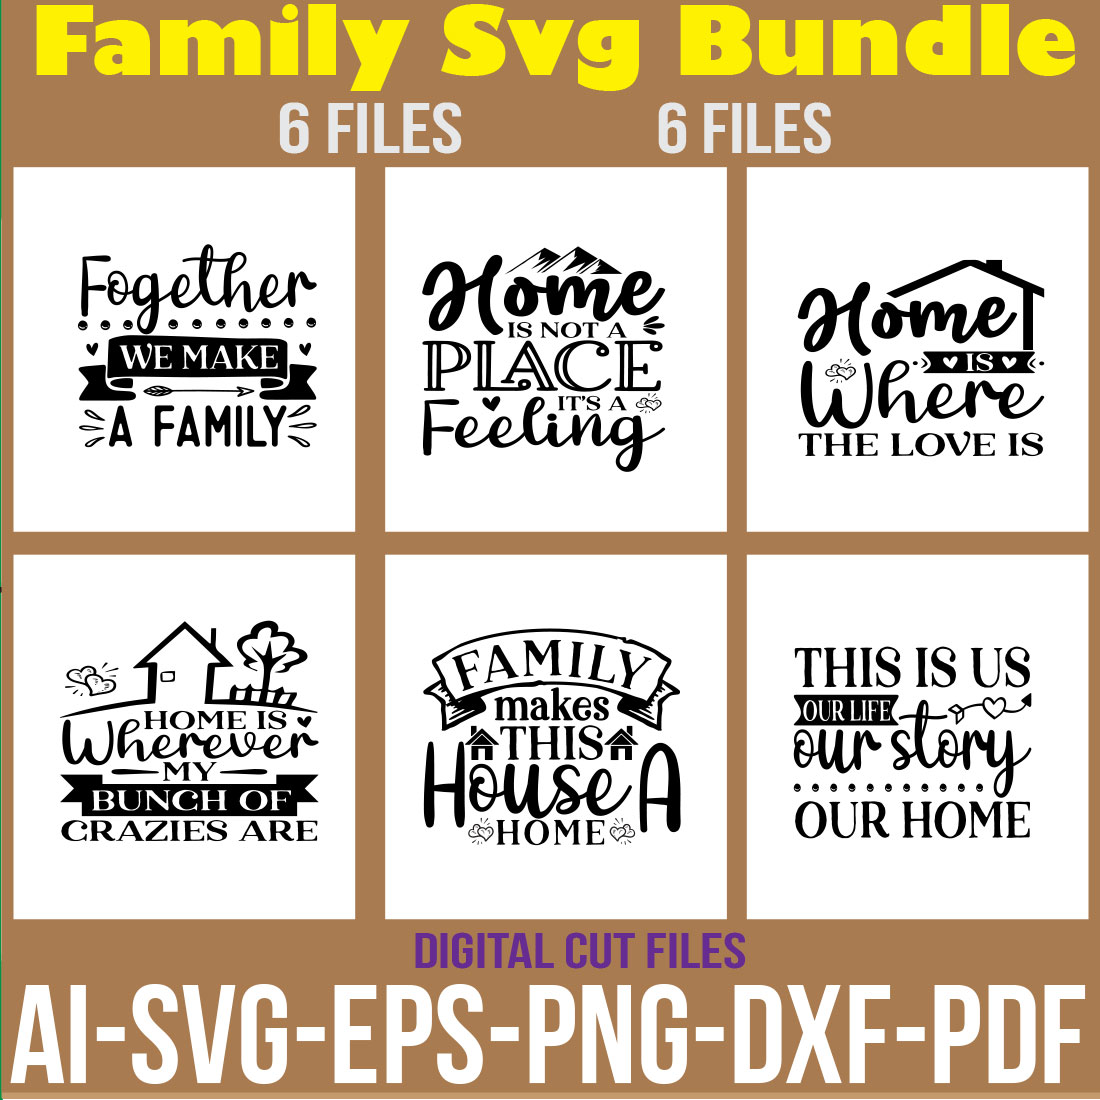 Family Svg Bundle cover image.